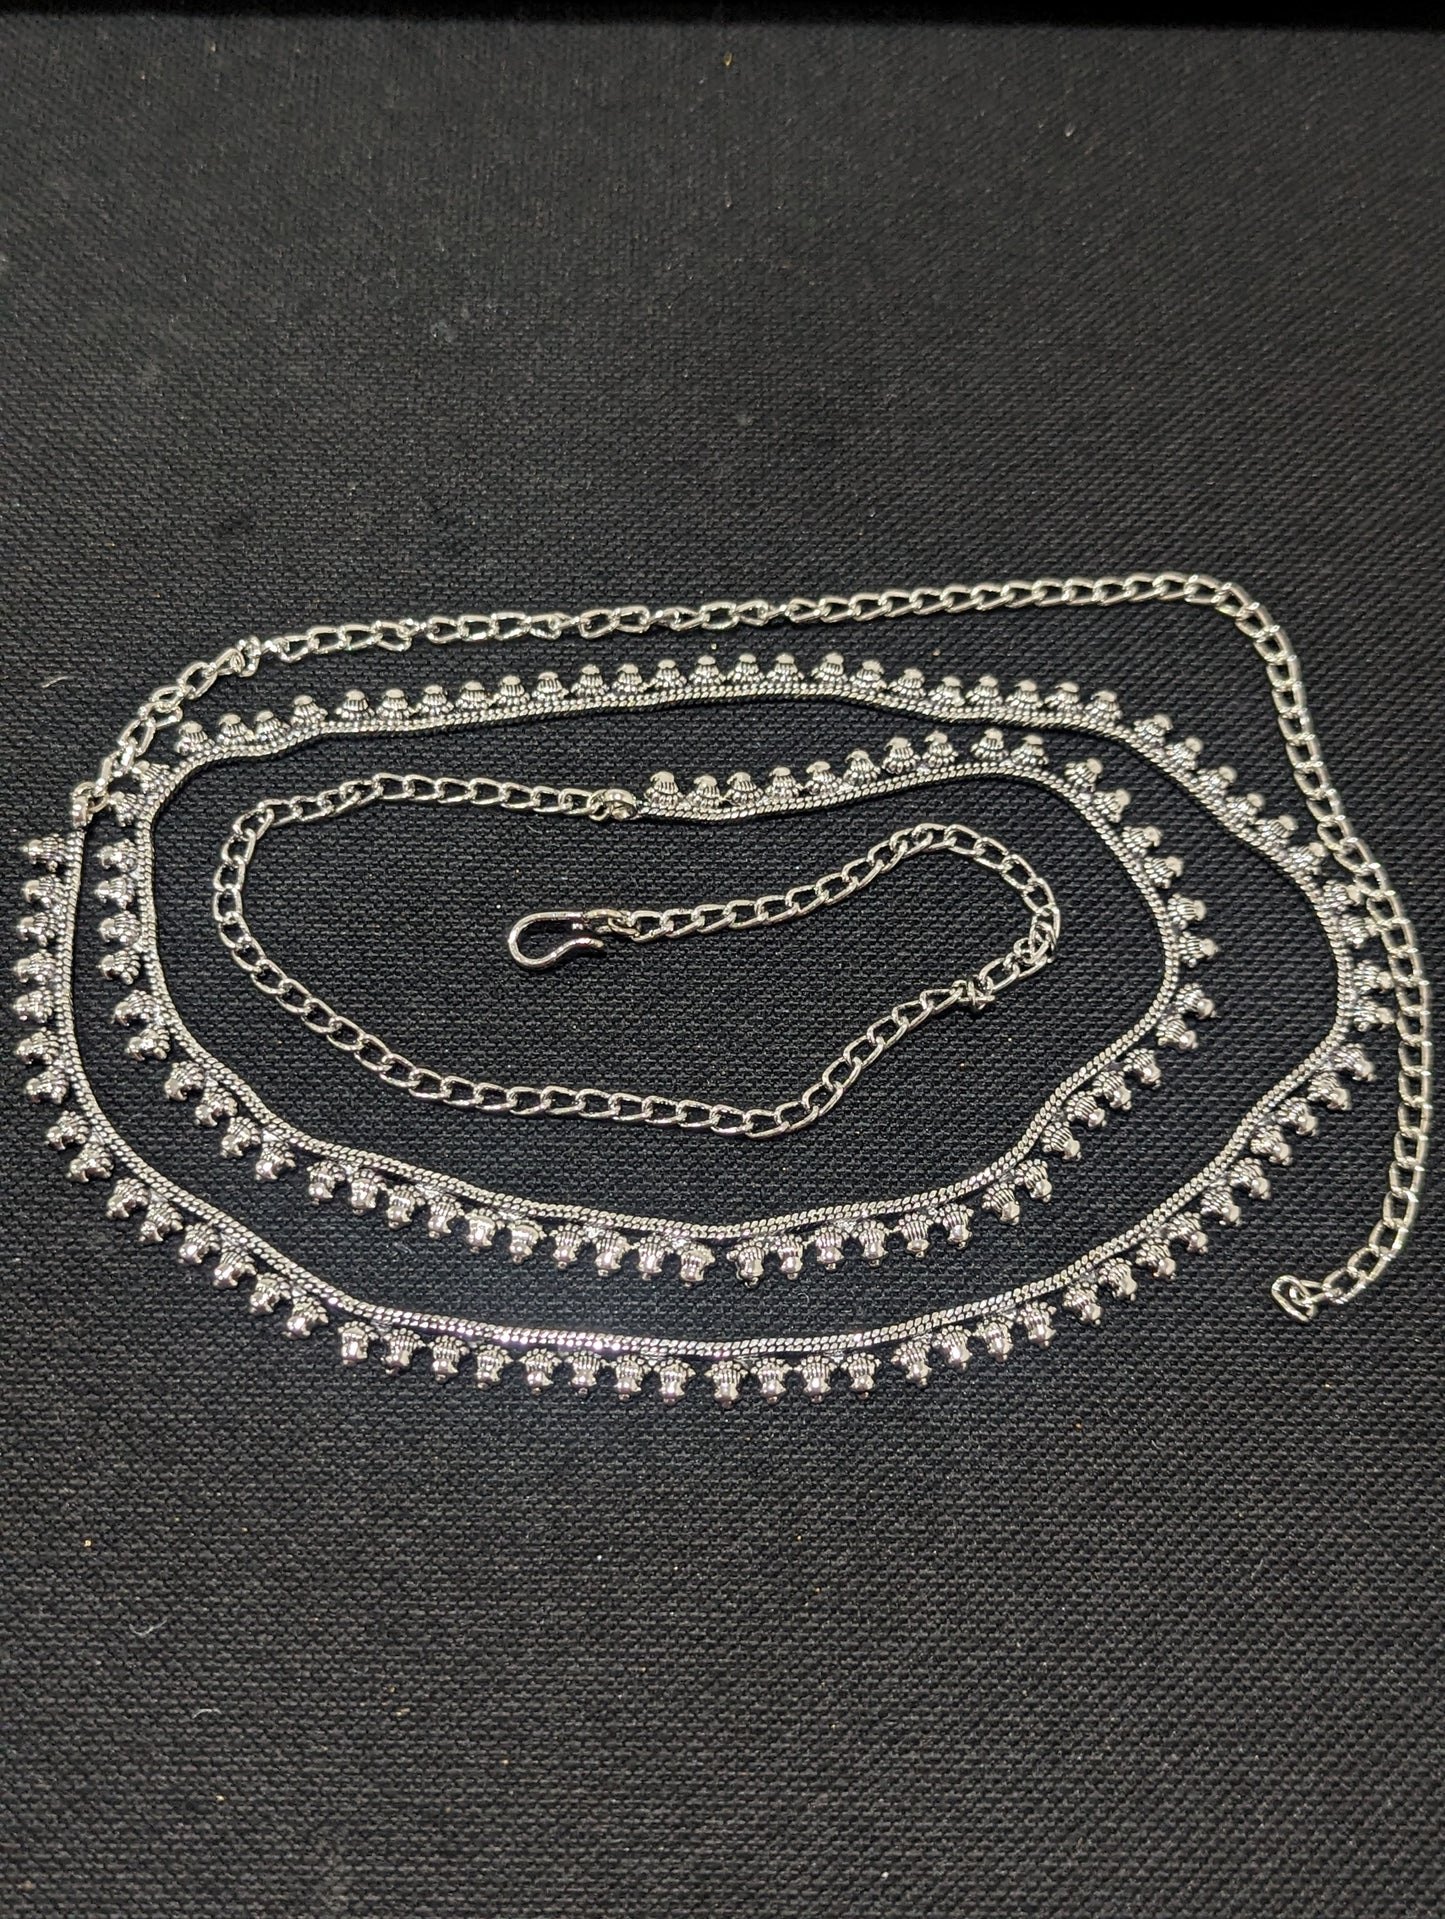 Oxidized Silver Hip Chain / Waist Belt / Belly Chain - D3